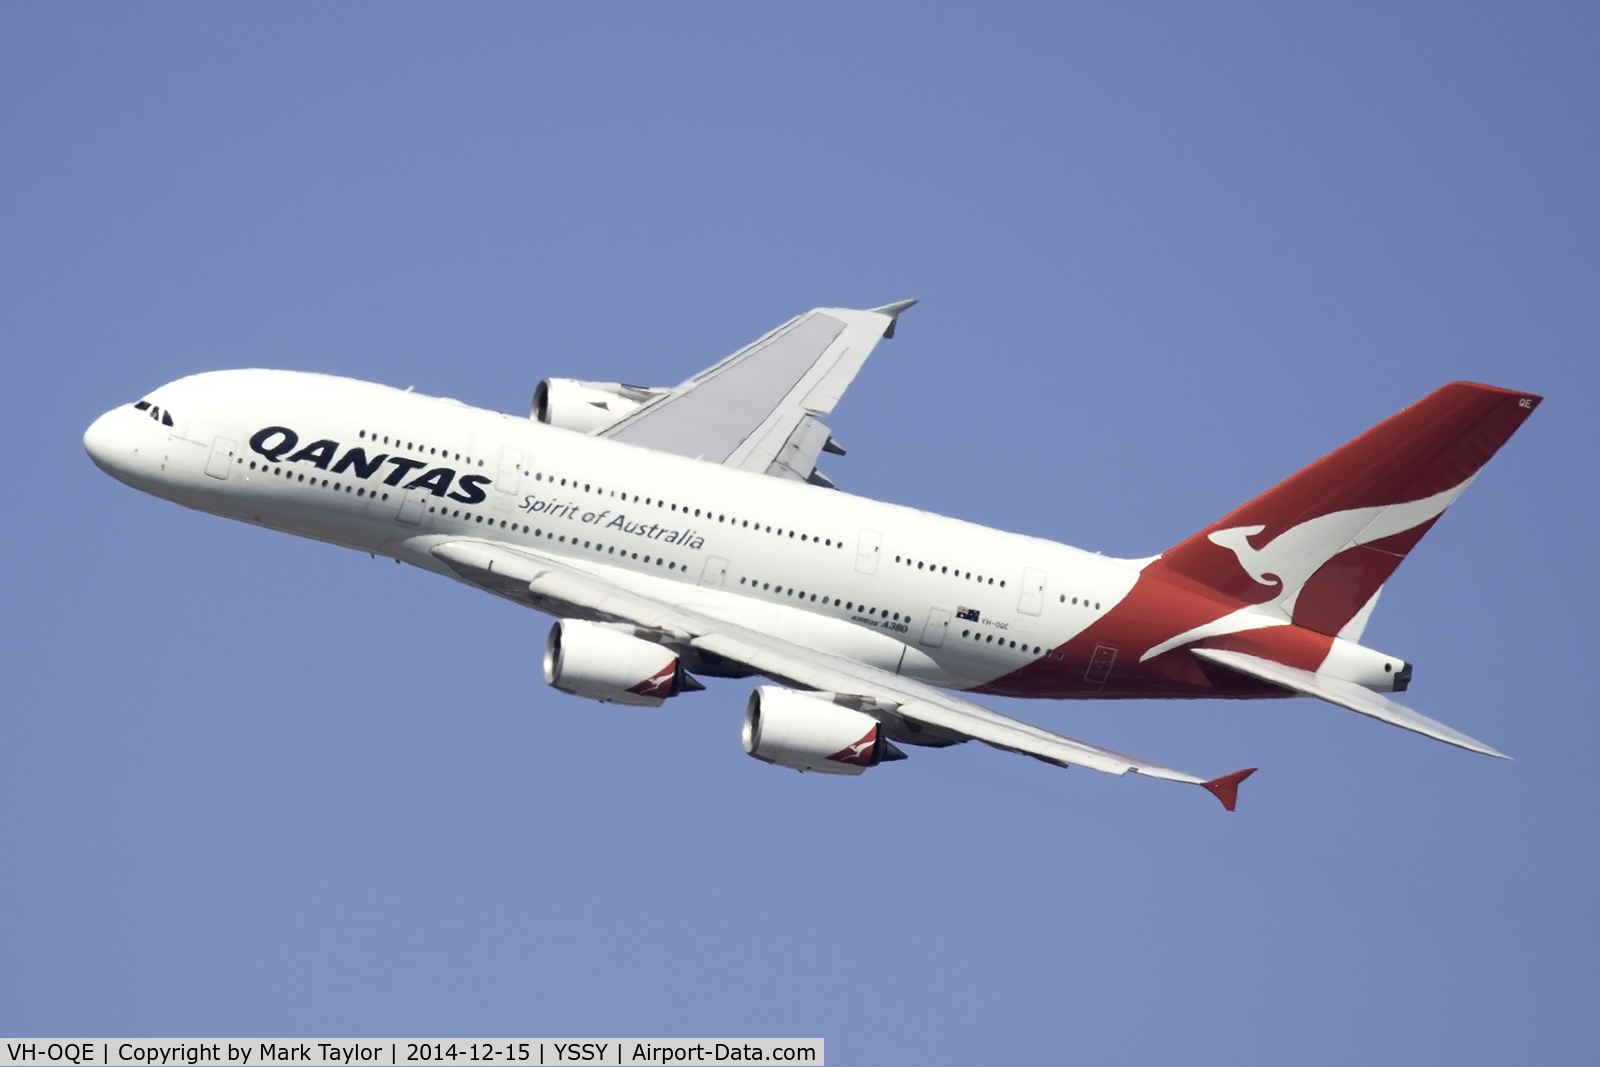 VH-OQE, 2009 Airbus A380-842 C/N 027, VH-OQE departing Sydney